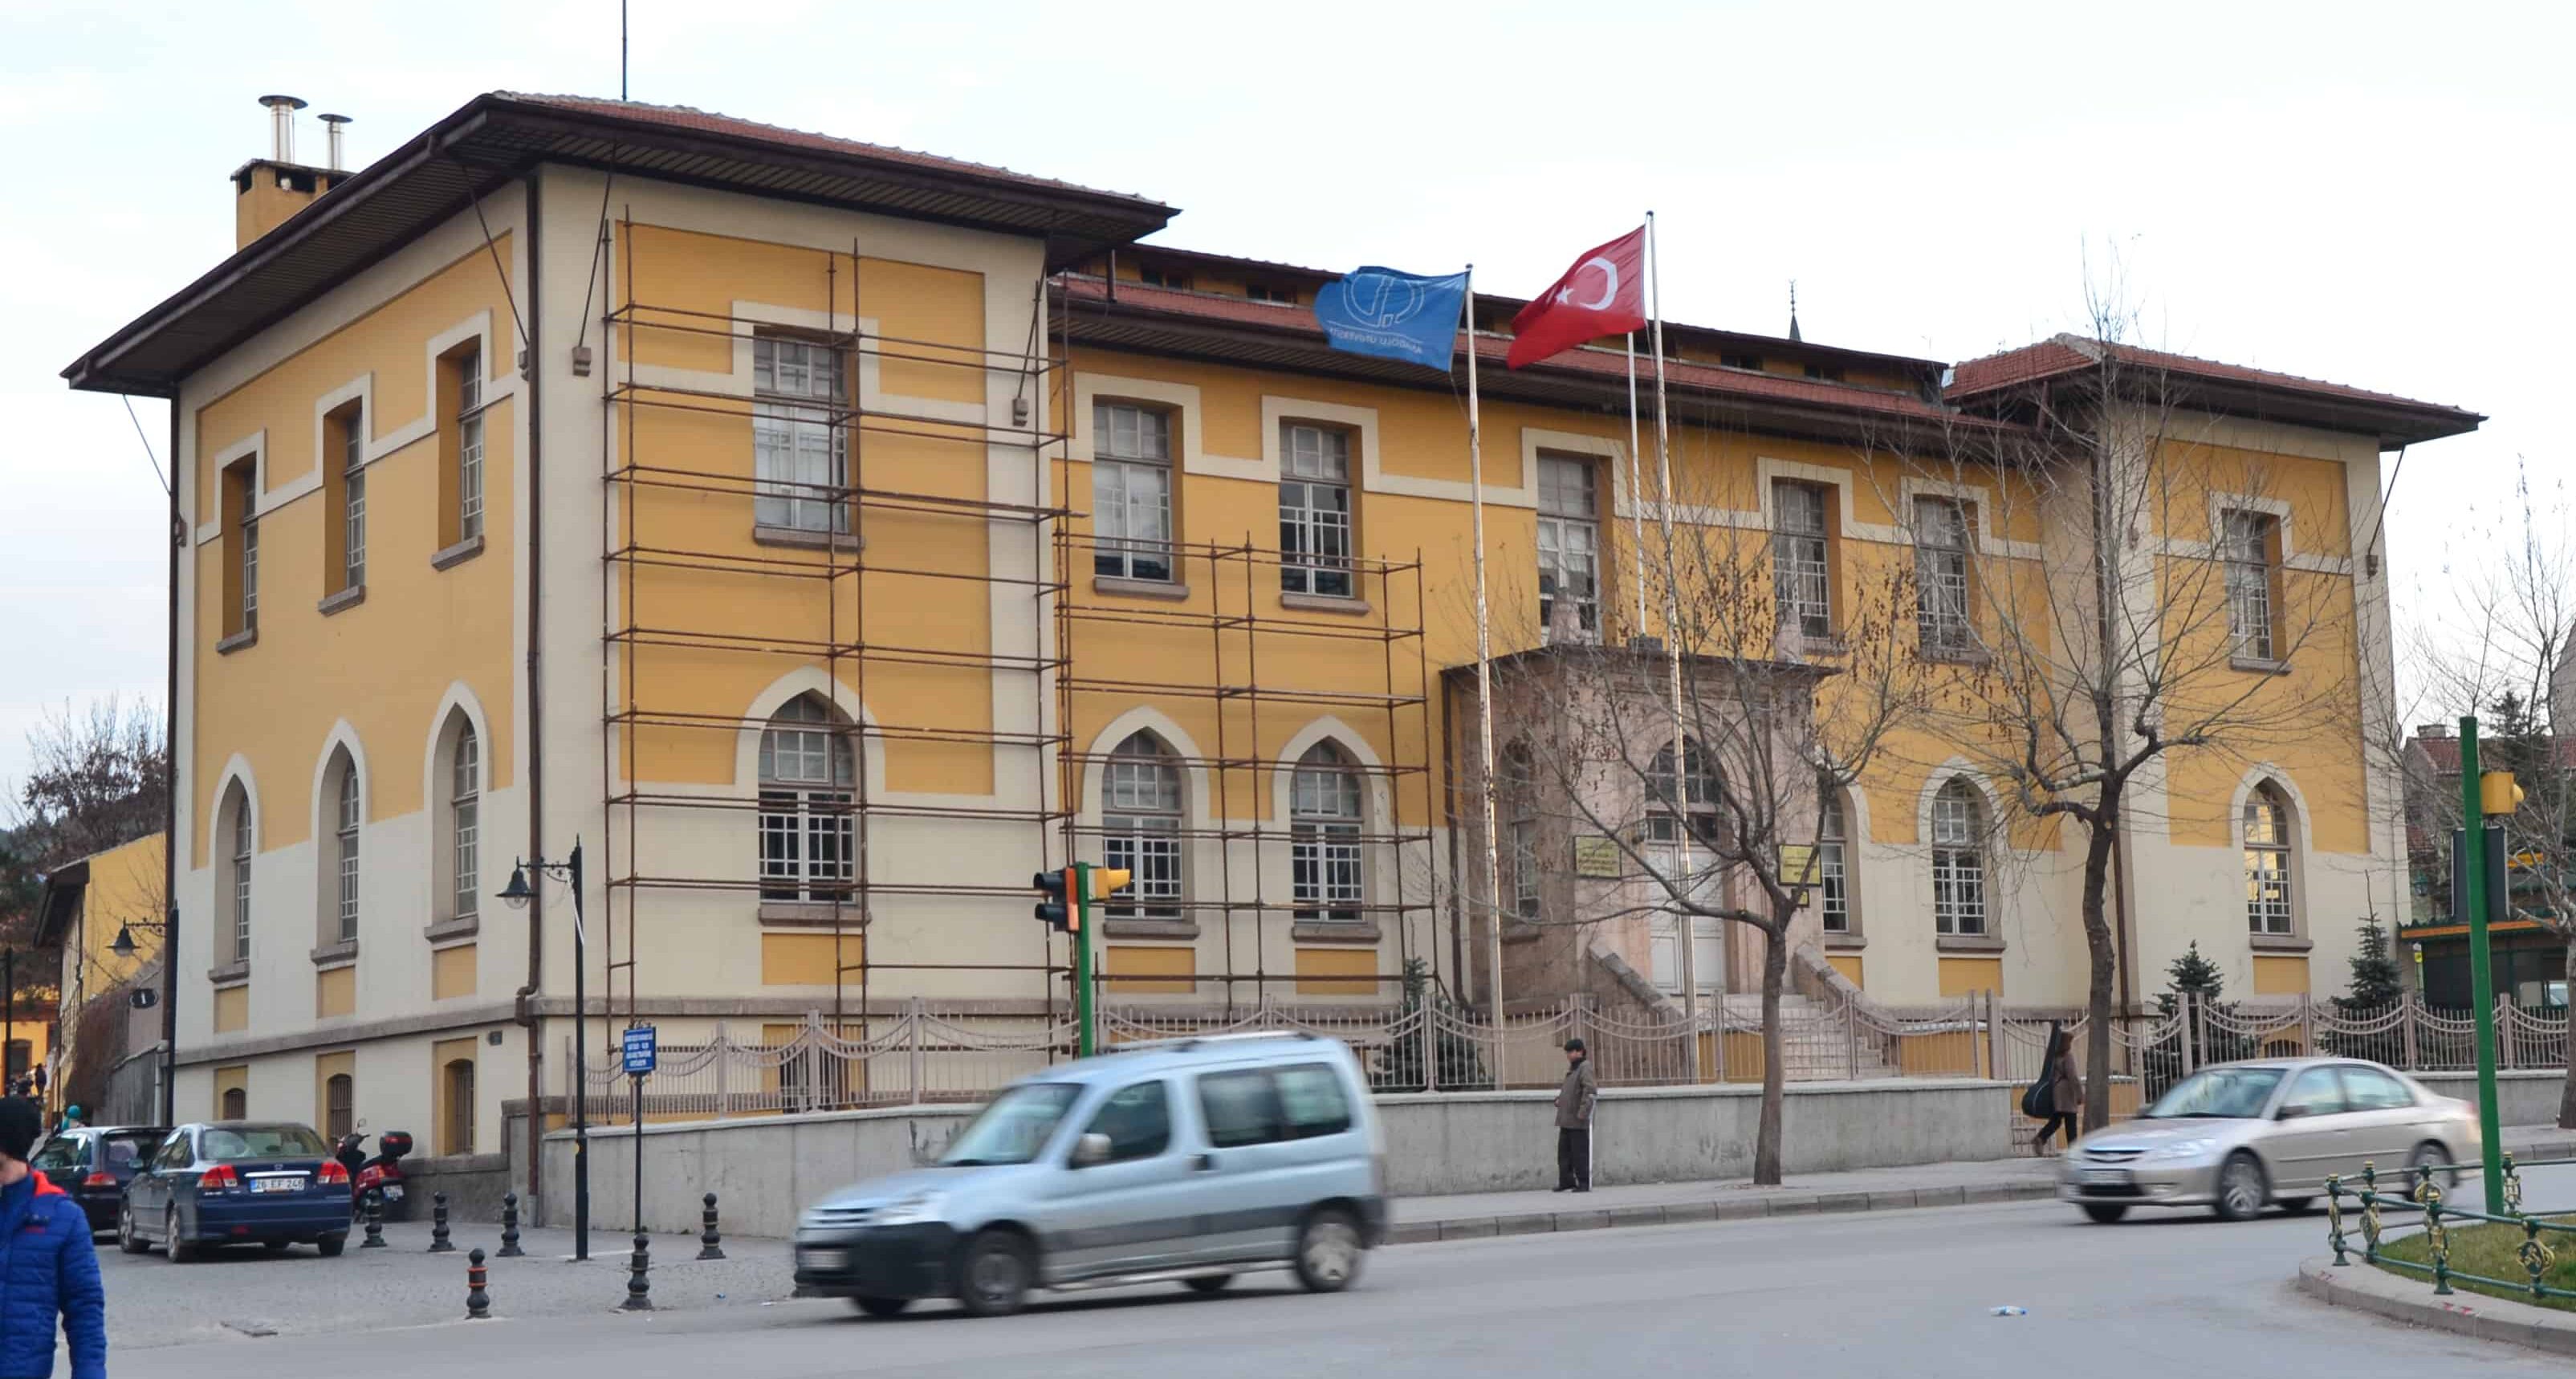 Anadolu University Republic History Museum in March 2013 in Eskişehir, Turkey